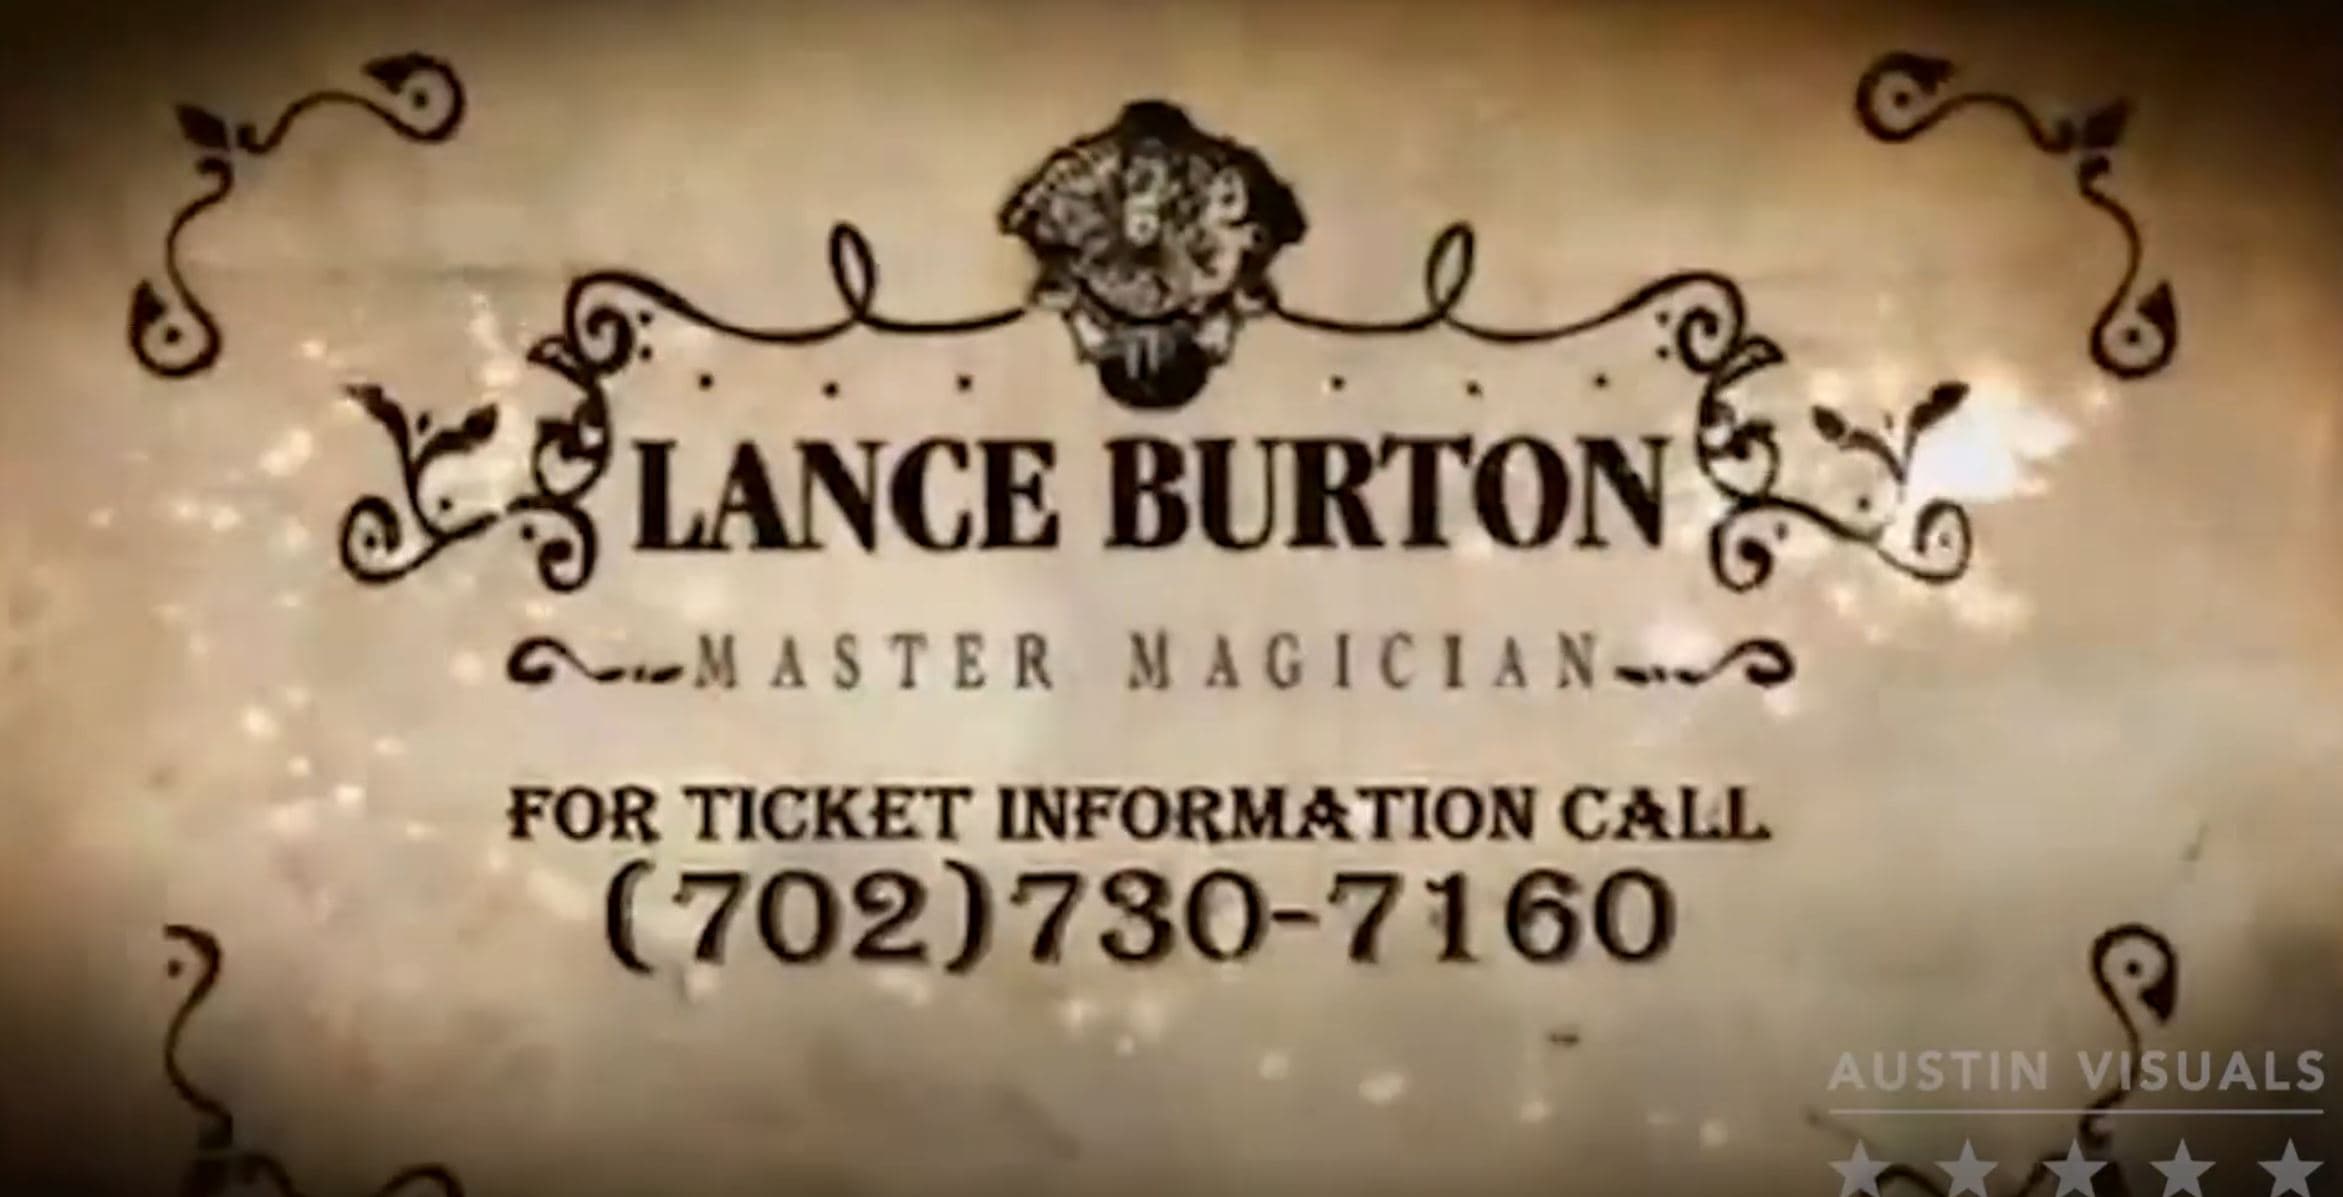 Lance Burton Magician TV Commercial